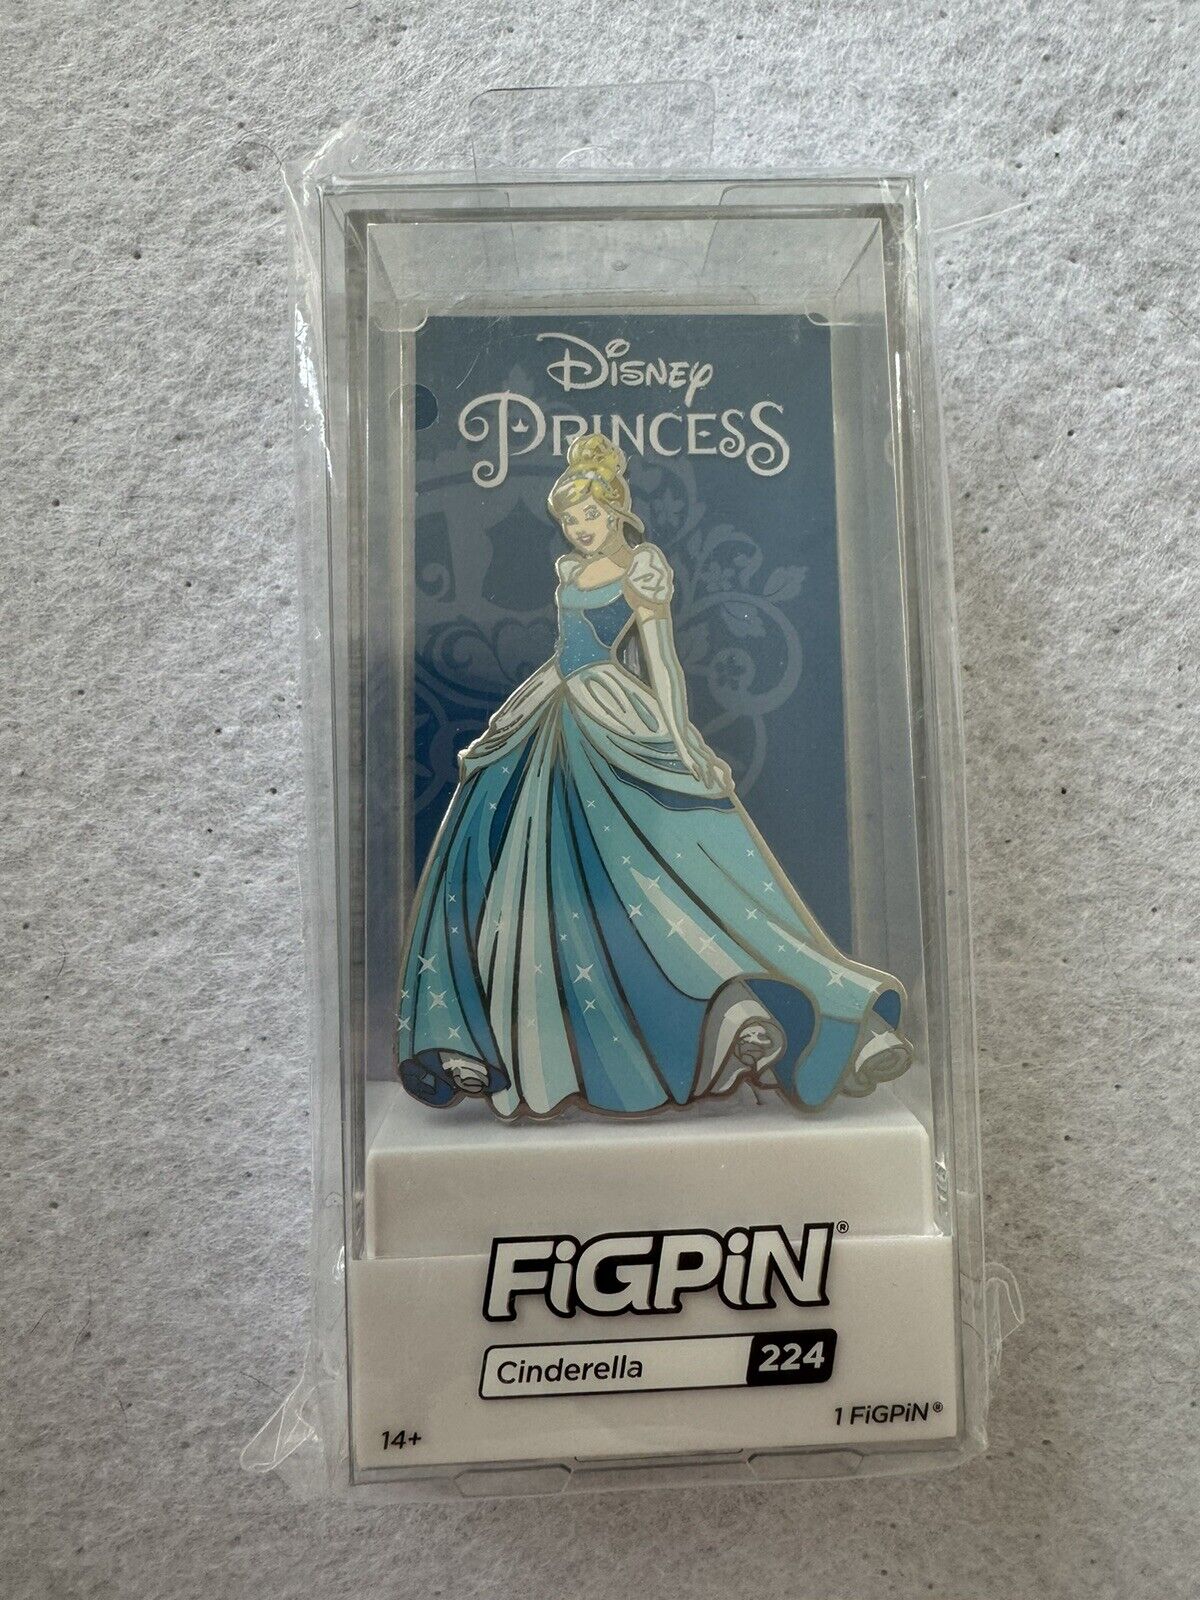 Disney Figpin Pin - Cinderella Blue Dress Jumbo Pin New In Box Sealed